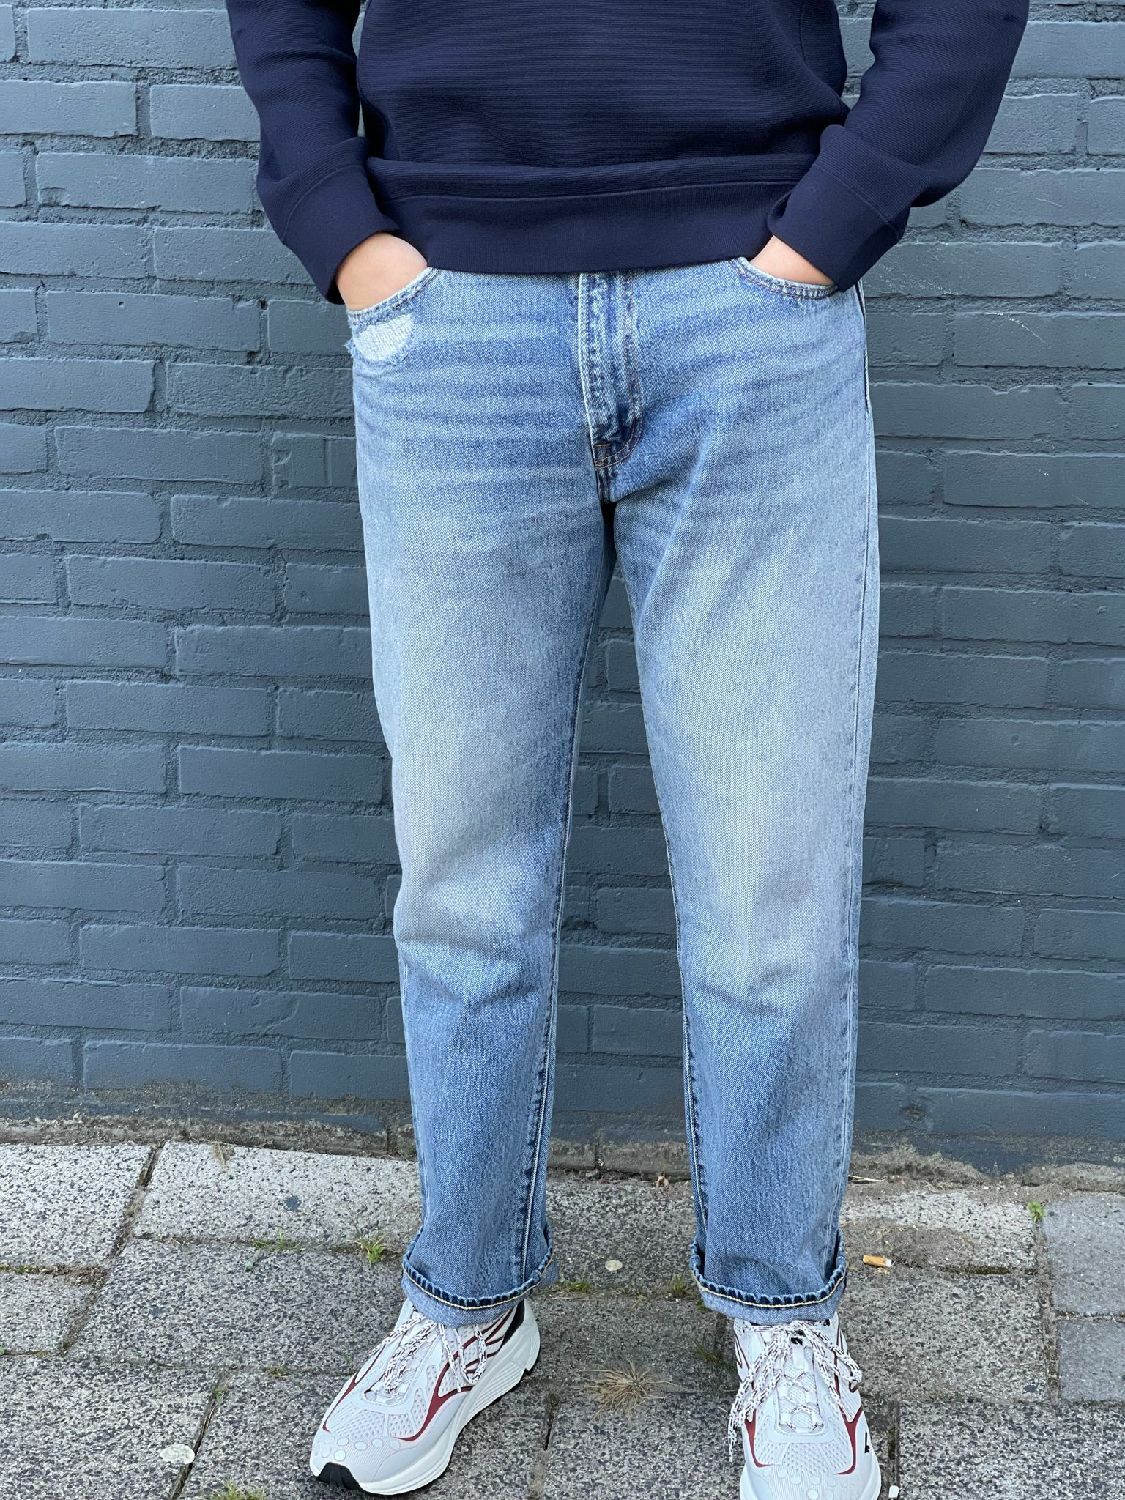 Op de grond grote Oceaan atomair Levi's heren jeans 551 Authentic straight Hula online kopen bij No Sense.  247670-0040 | Where jeans meet fashion